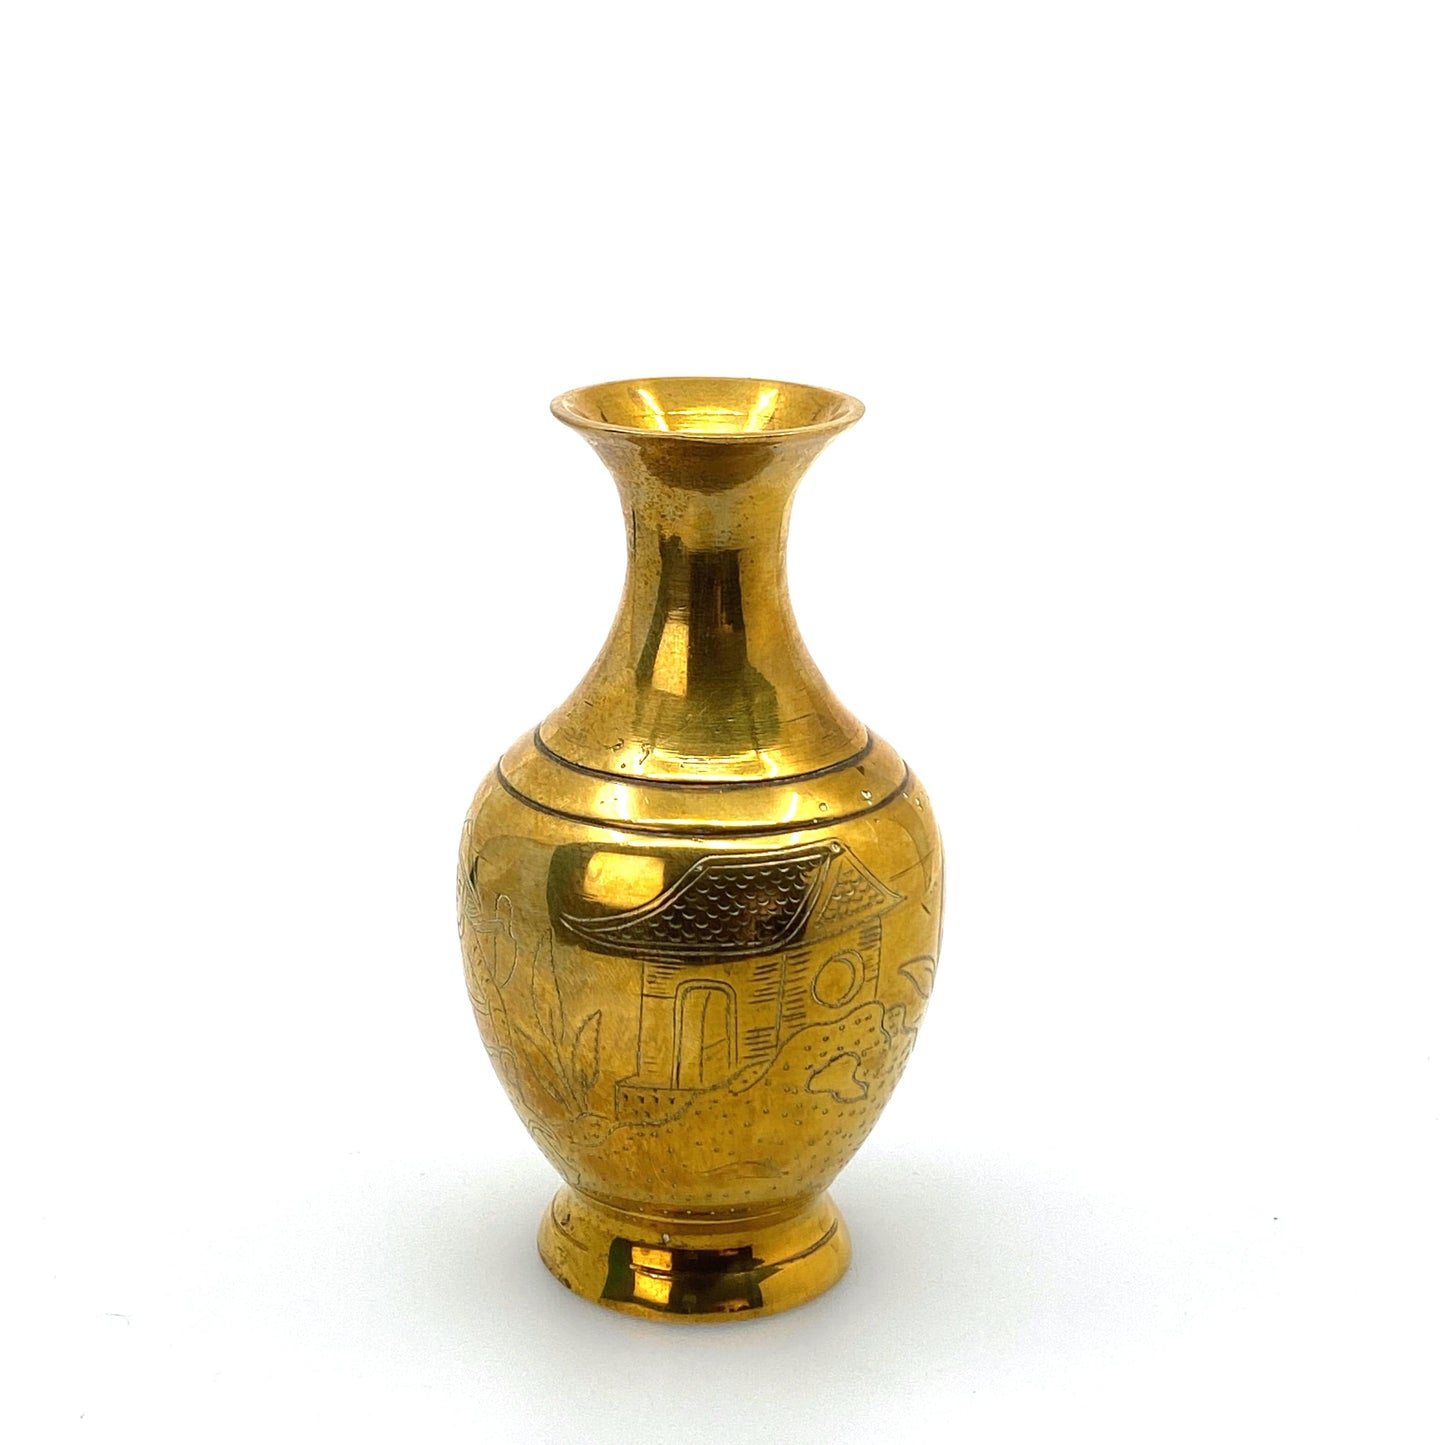 Vintage Asian Themed Engraved Brass Vases - Set of 2